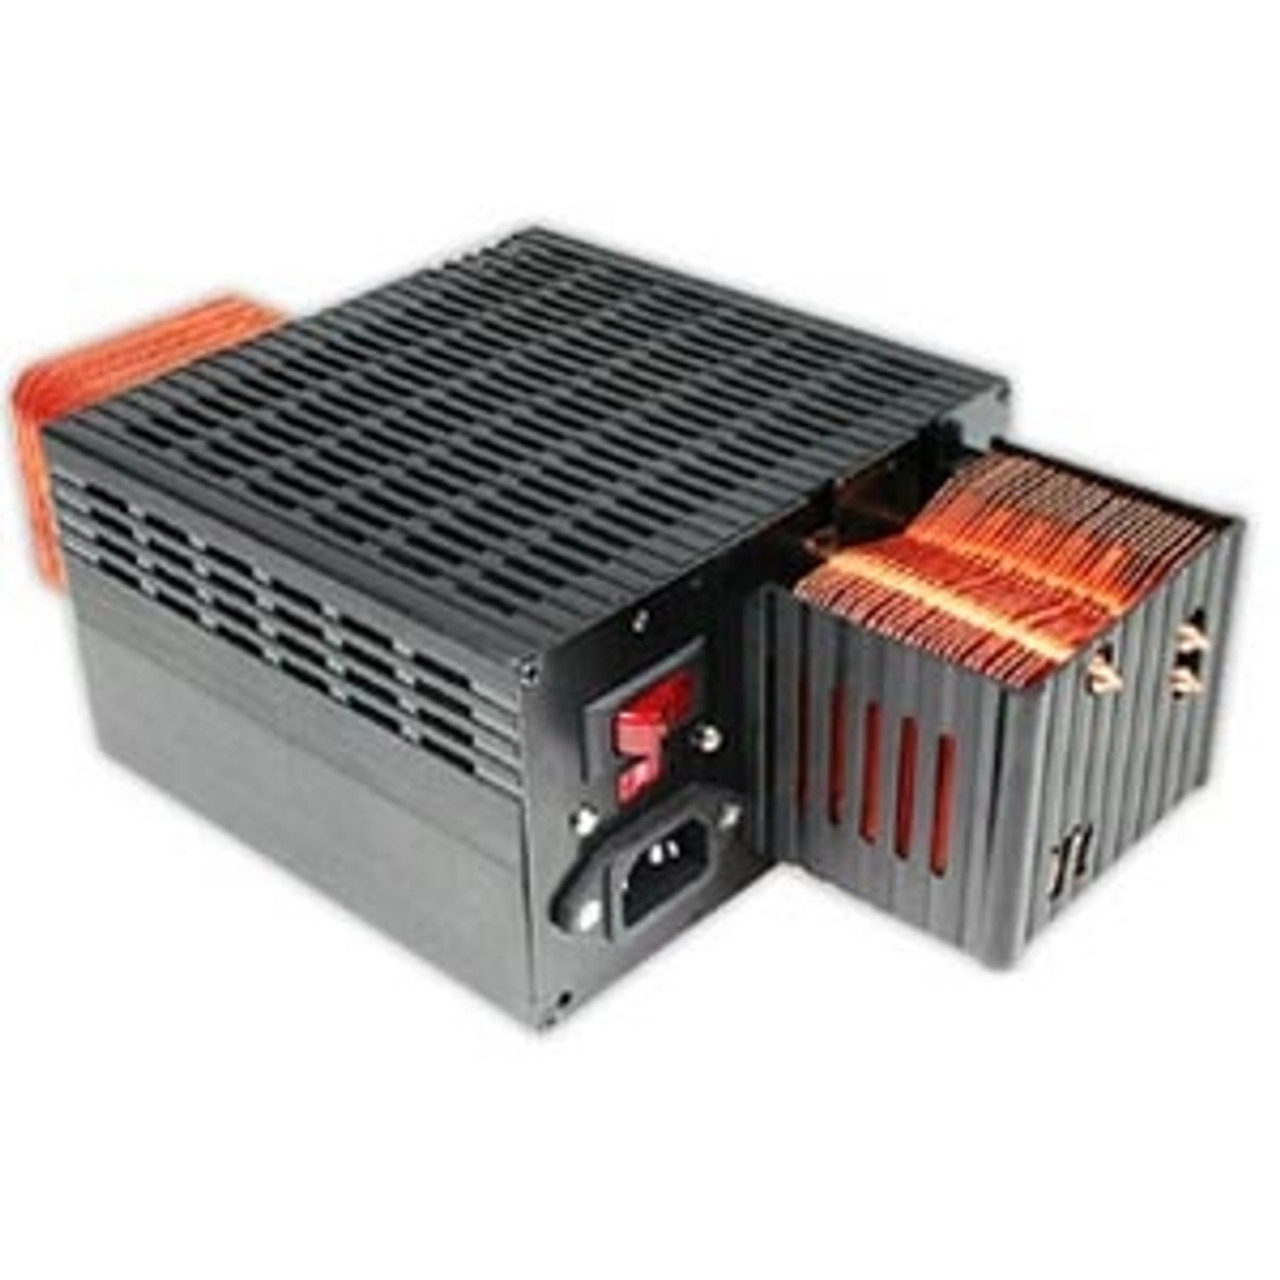 W0029 Thermaltake Silent PurePower 350 Watt ATX 12V AC Power Supply